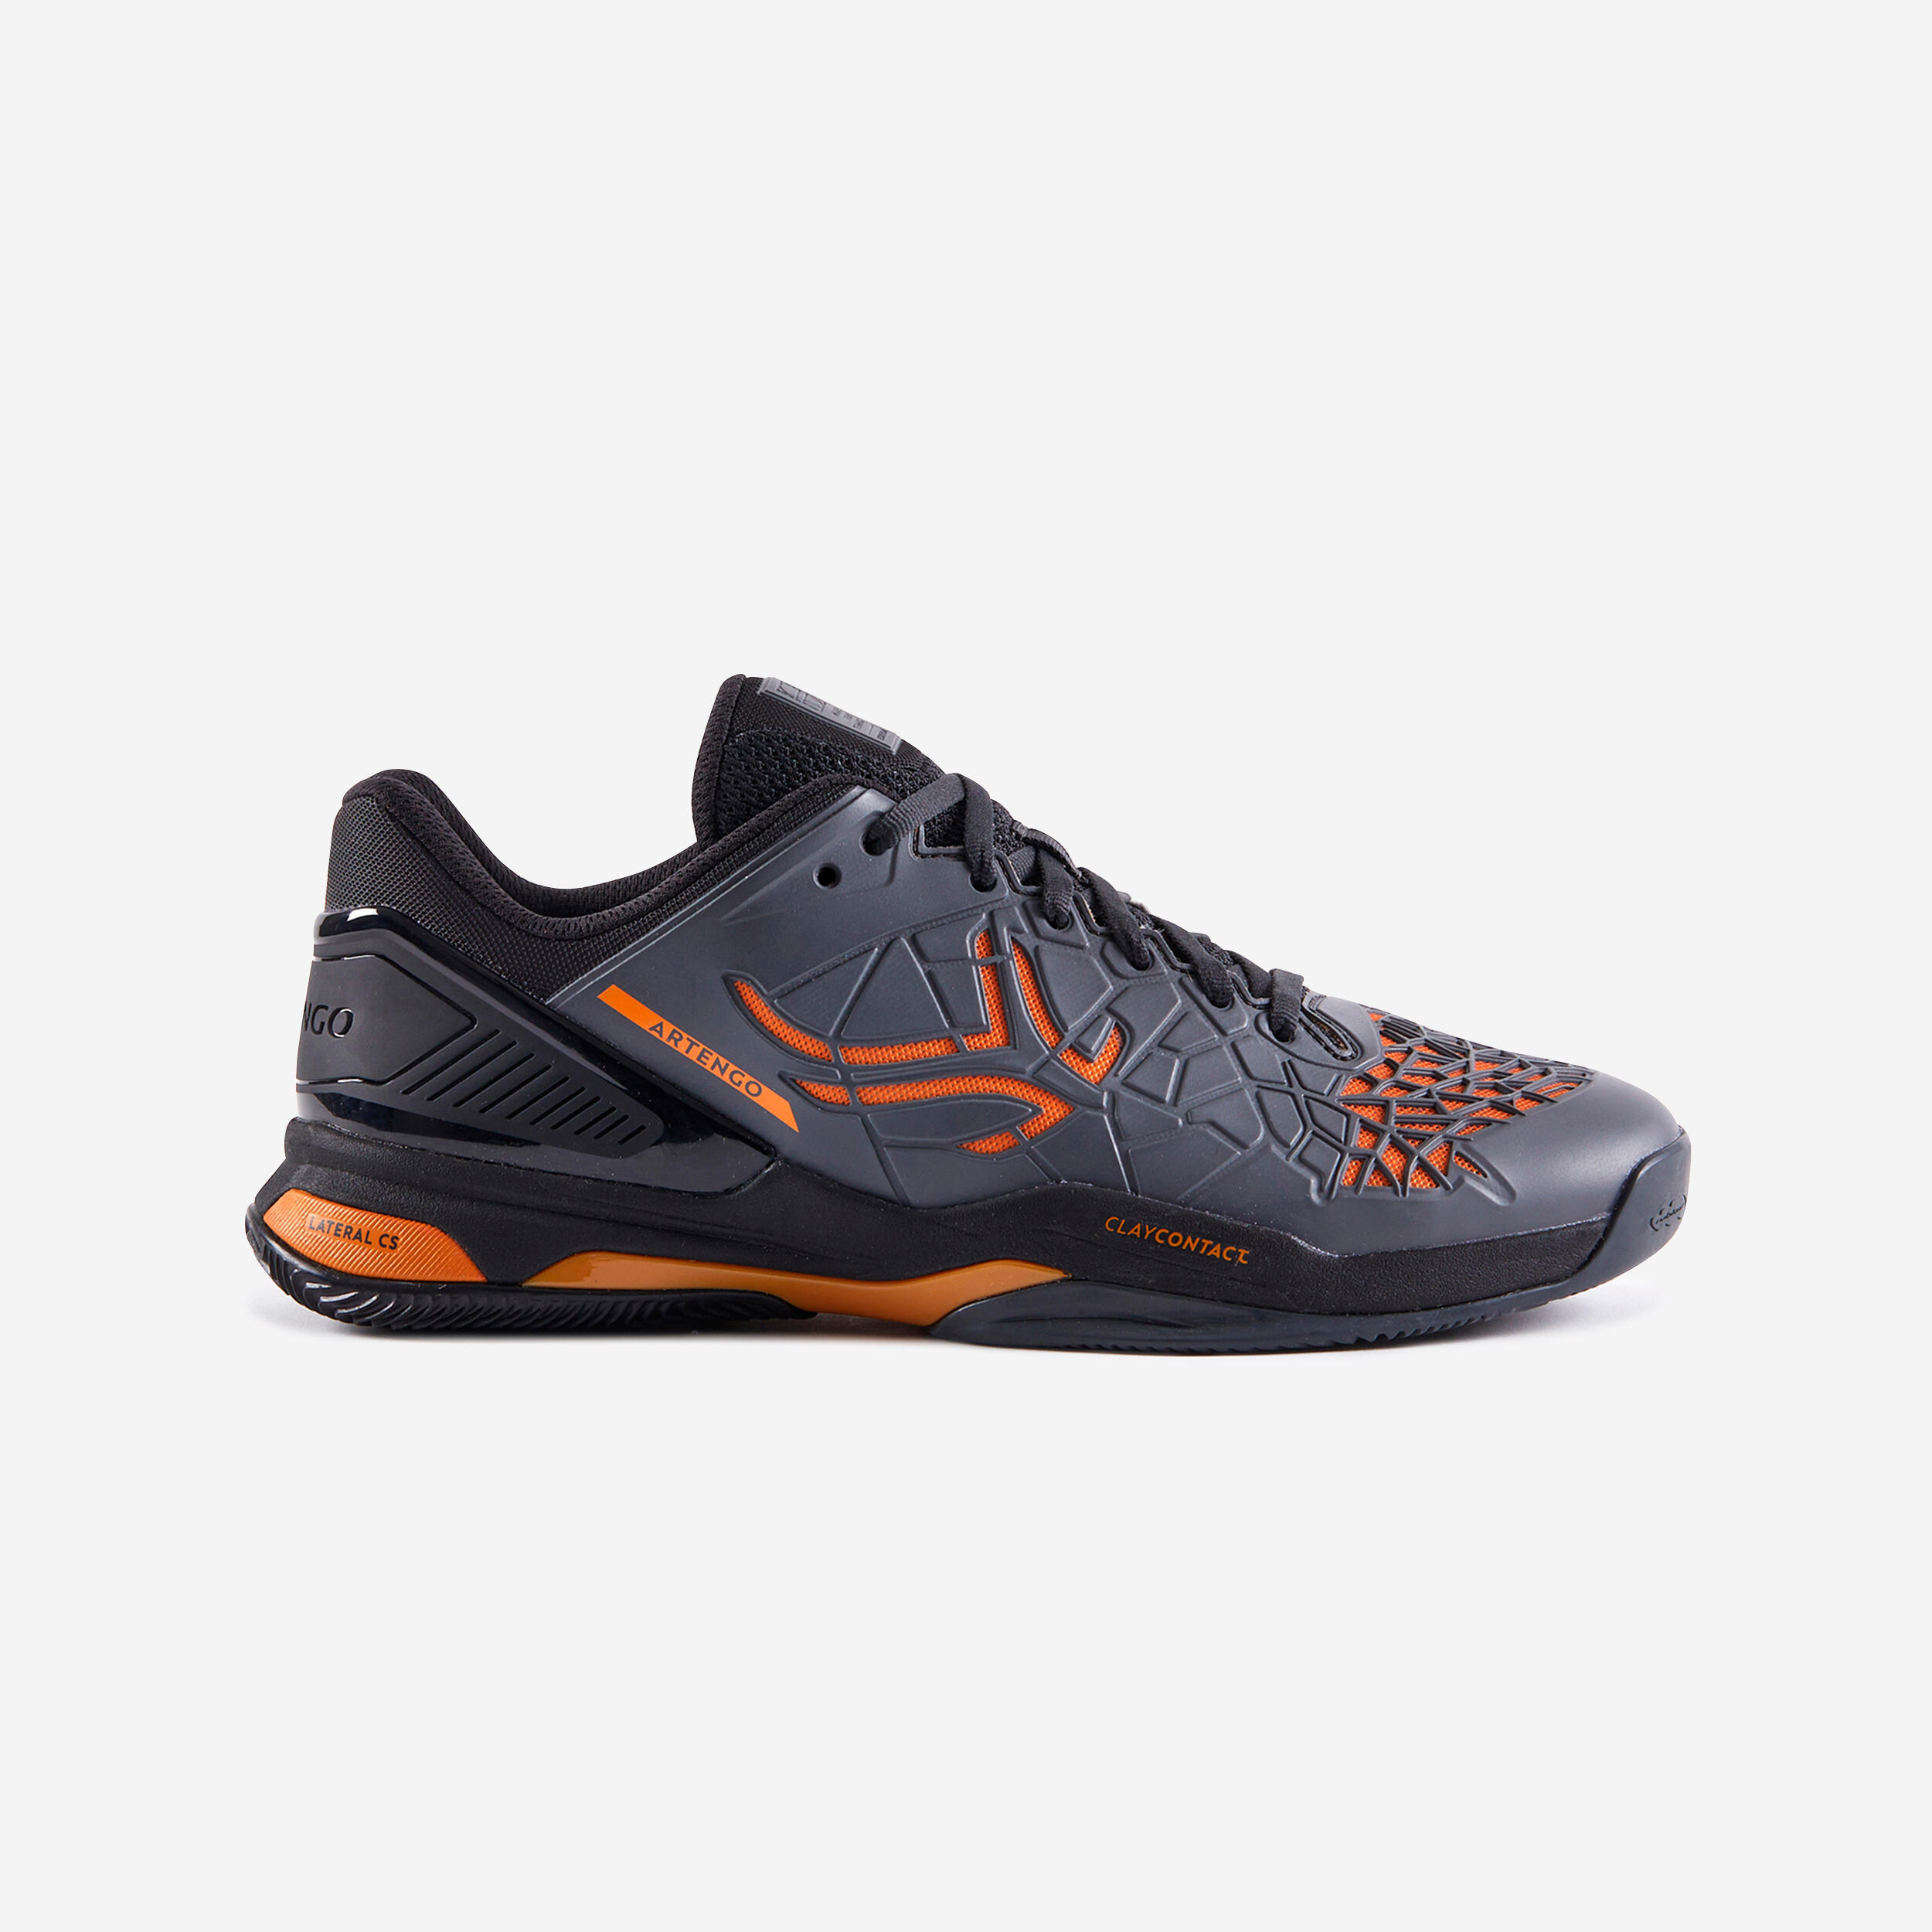 Men's Clay Court Tennis Shoes Strong Pro - Grey/Ochre ARTENGO